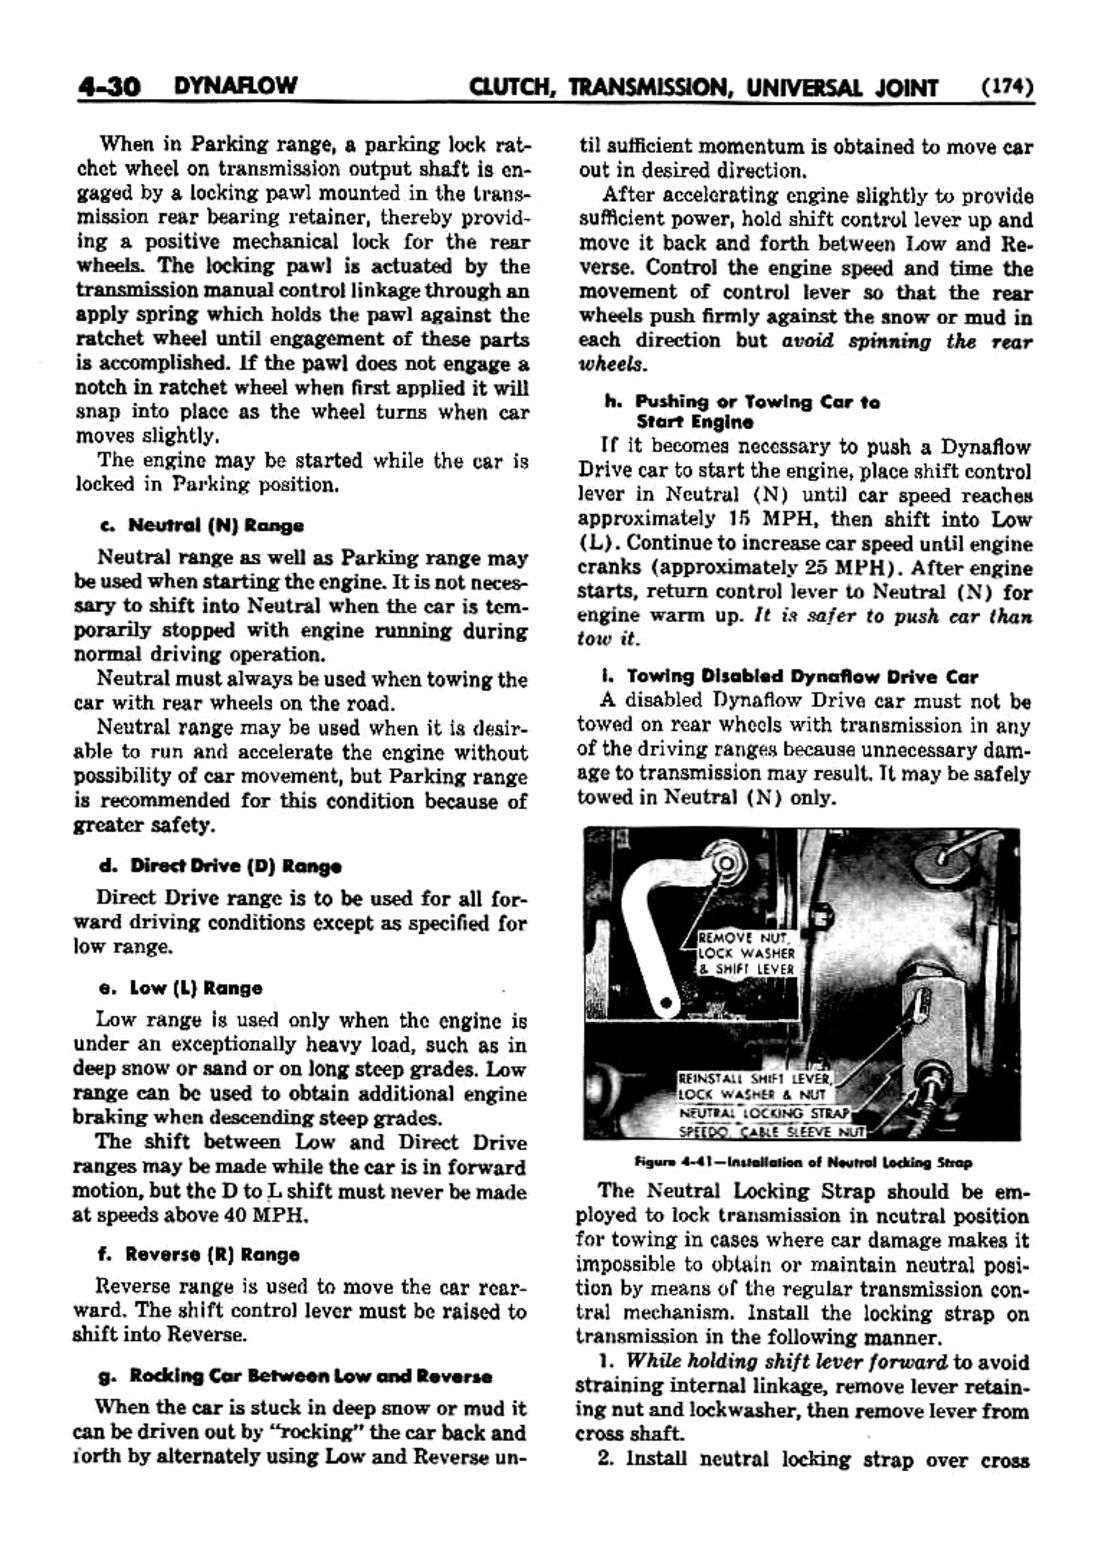 n_05 1952 Buick Shop Manual - Transmission-030-030.jpg